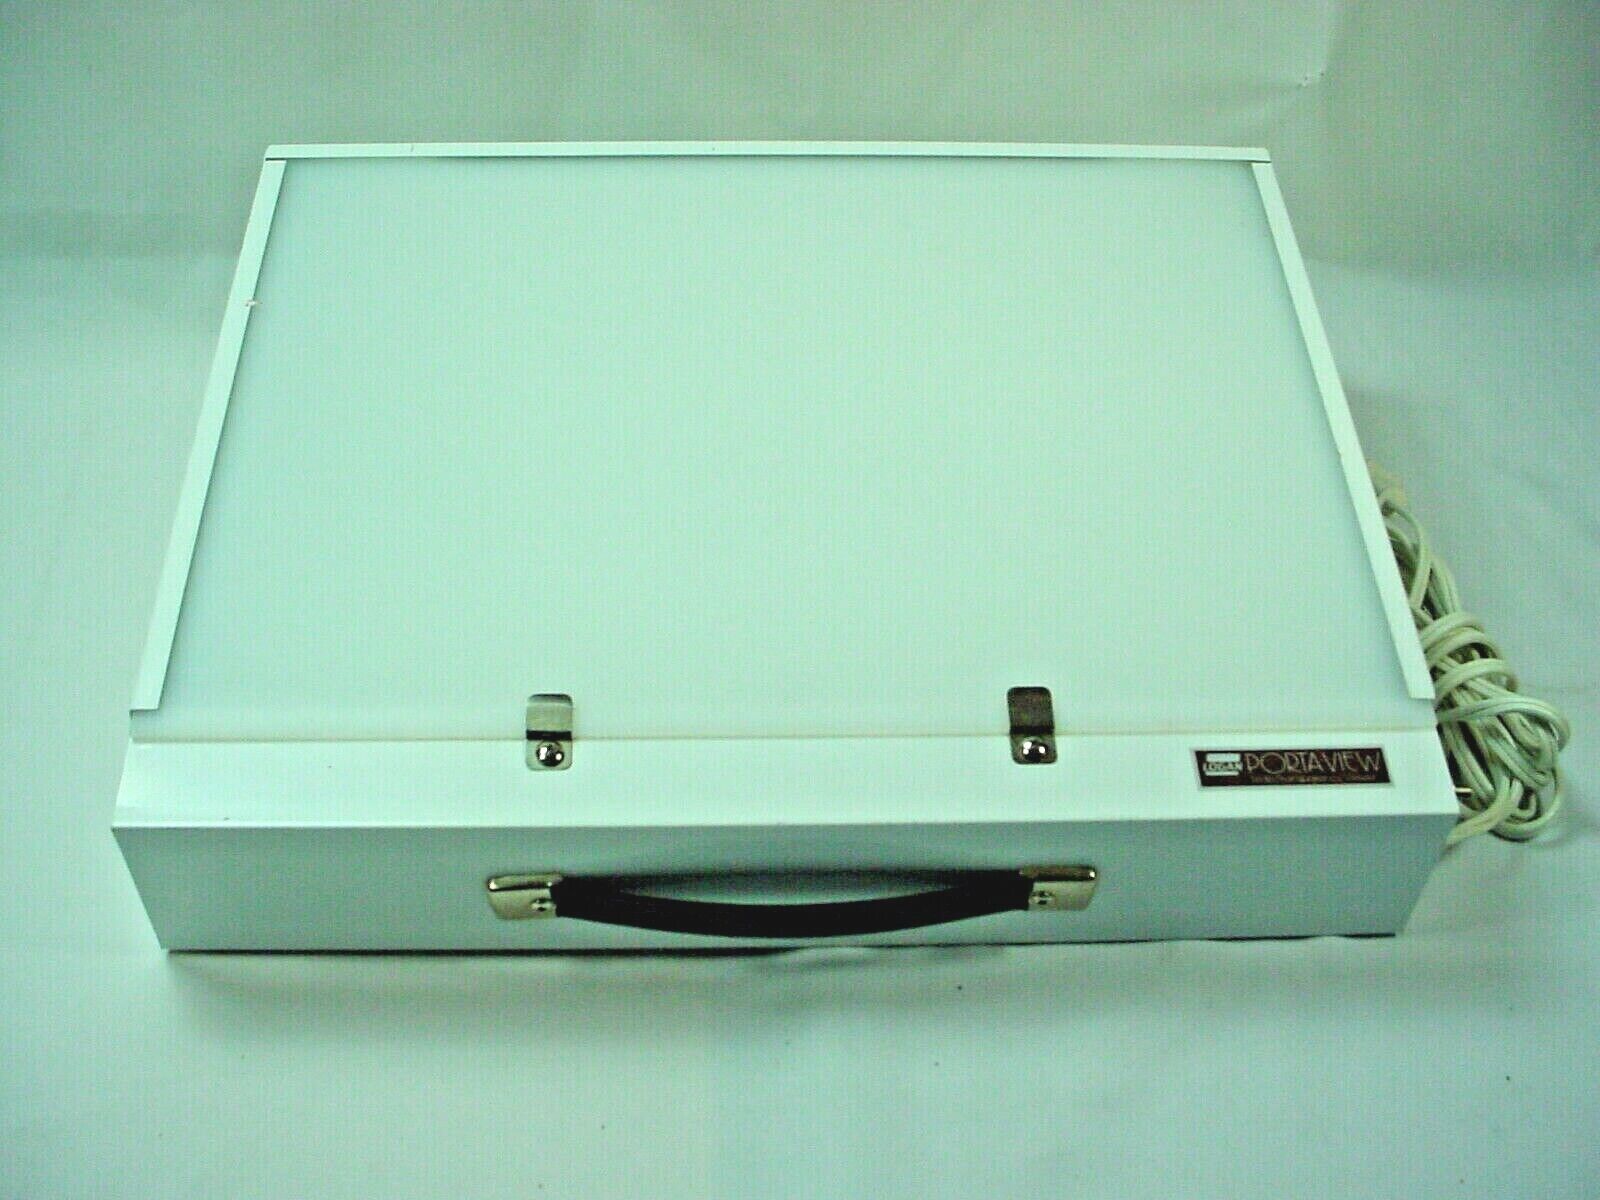 Logan Portaview Transparency Slide X-ray Viewer Drawing Light Box